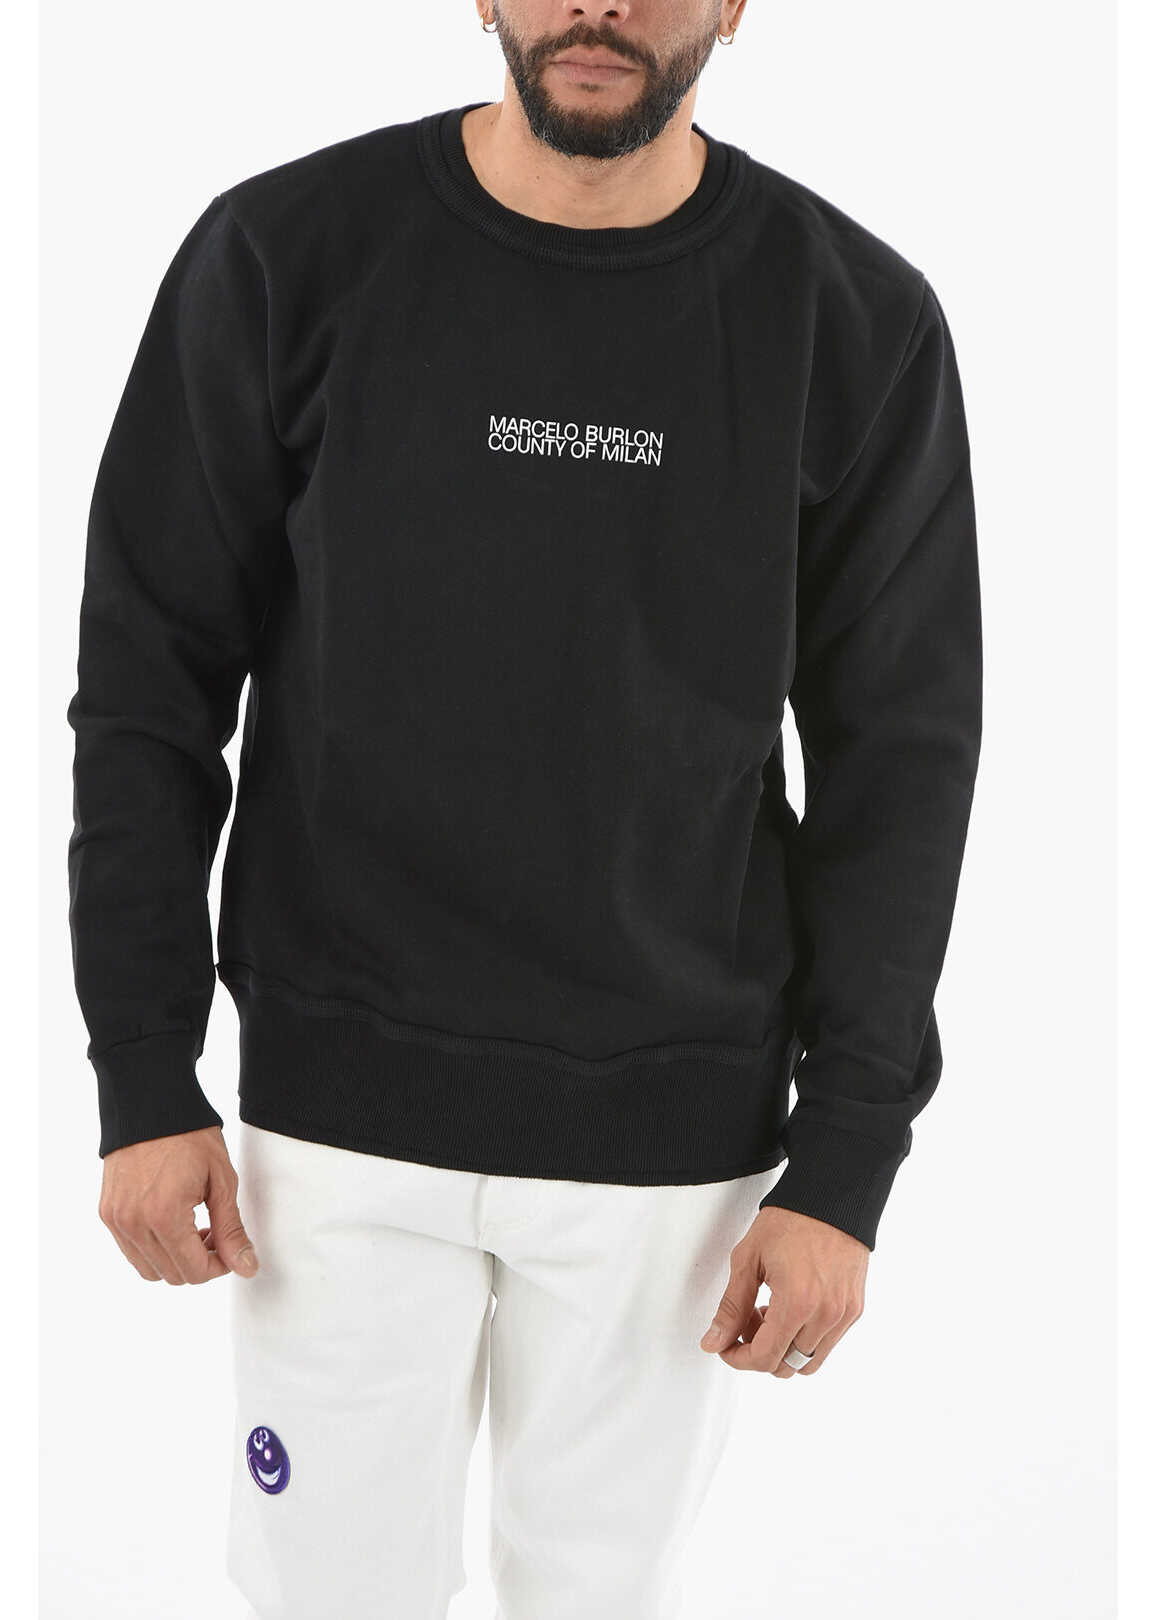 Marcelo Burlon Crew Neck Multi Faces Sweatshirt With Printed Logo Black